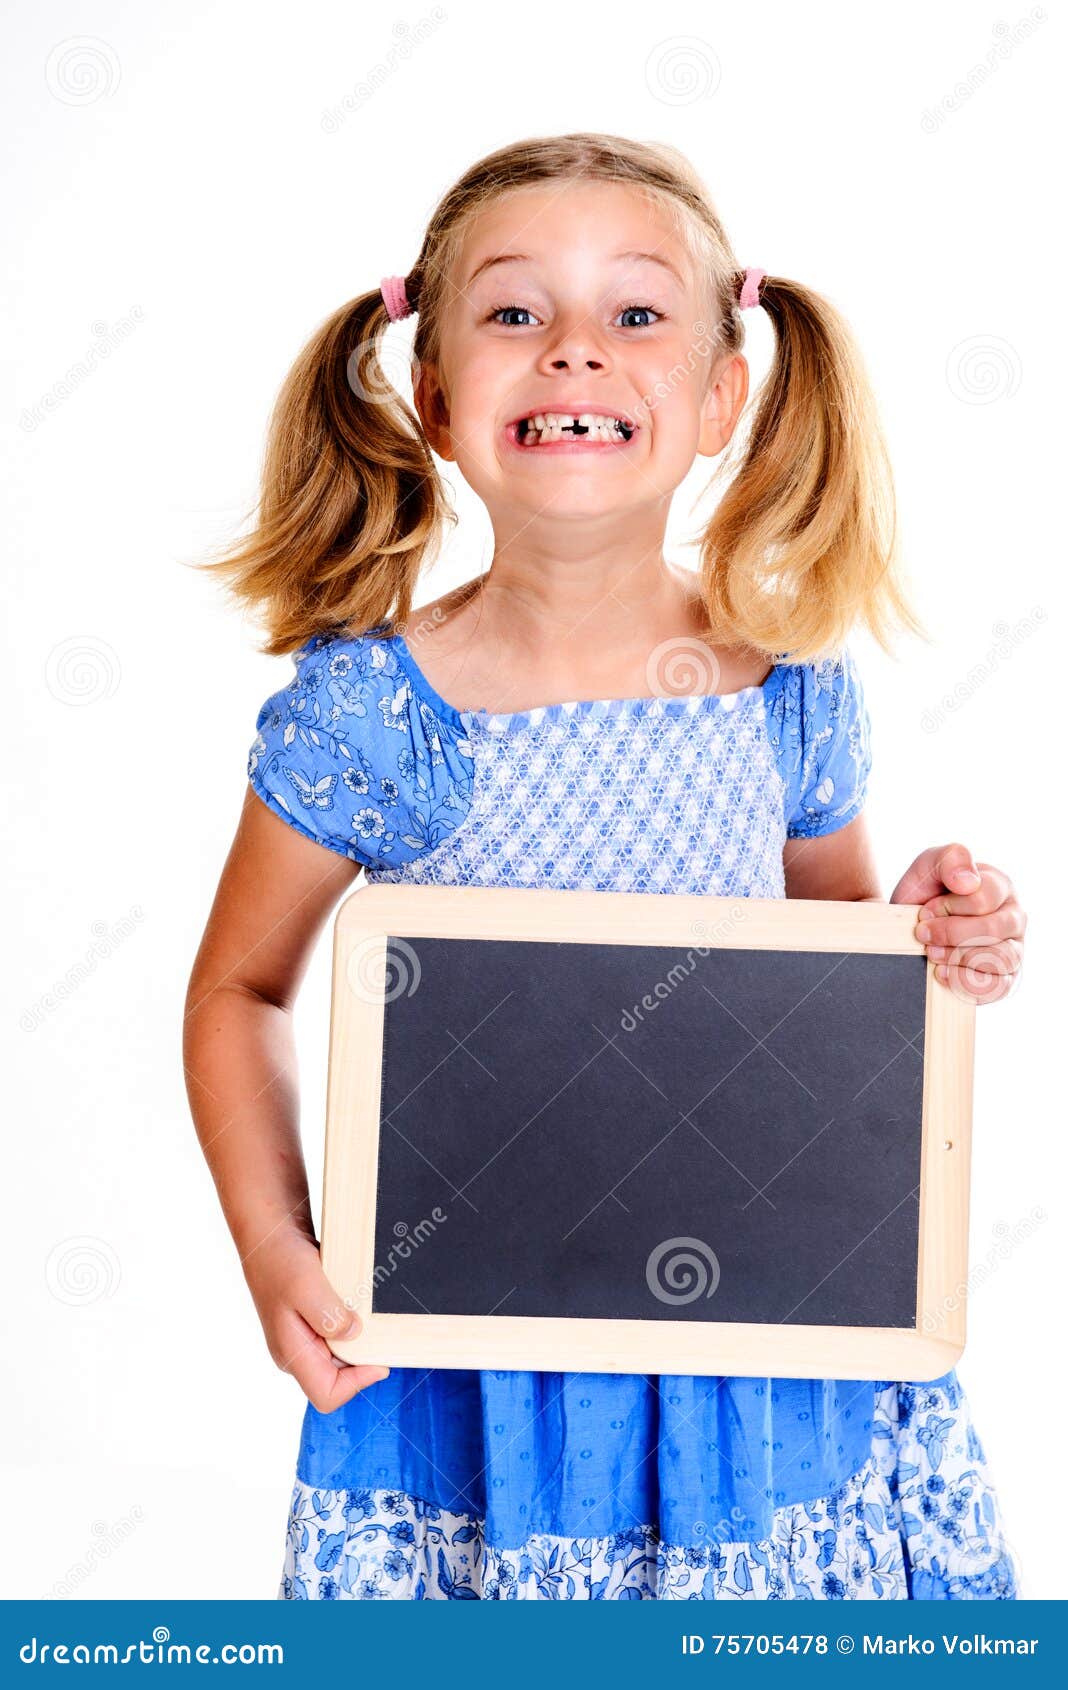 girl with space width showing a little blackboard